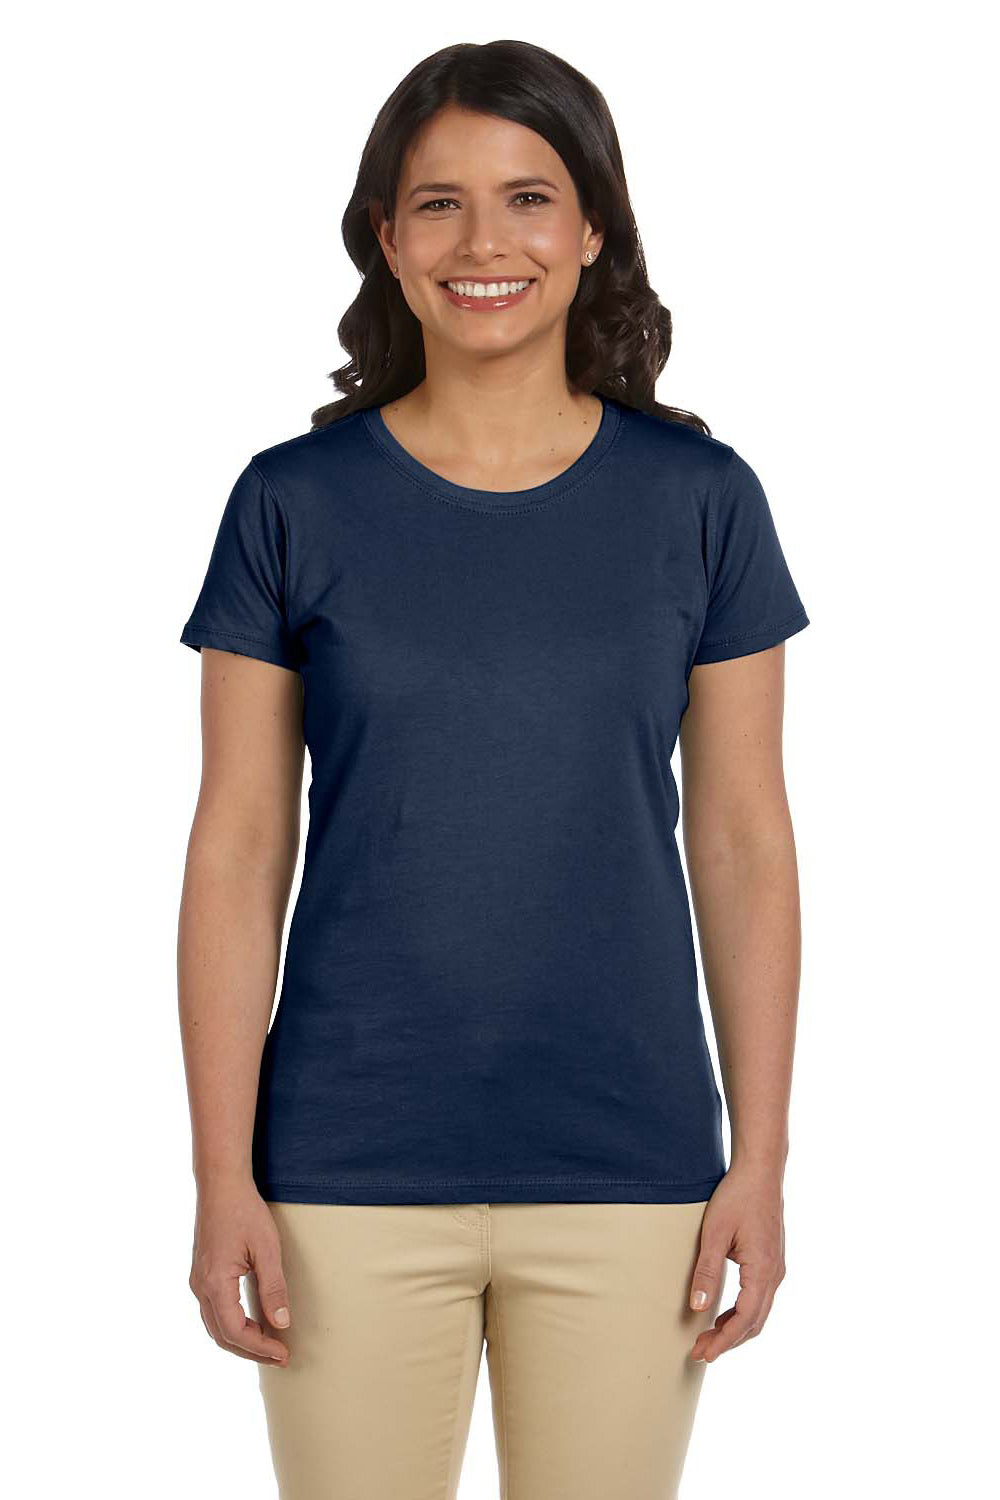 Econscious EC3000 Womens Heather Sueded Short Sleeve Crewneck T-Shirt Navy Blue Front